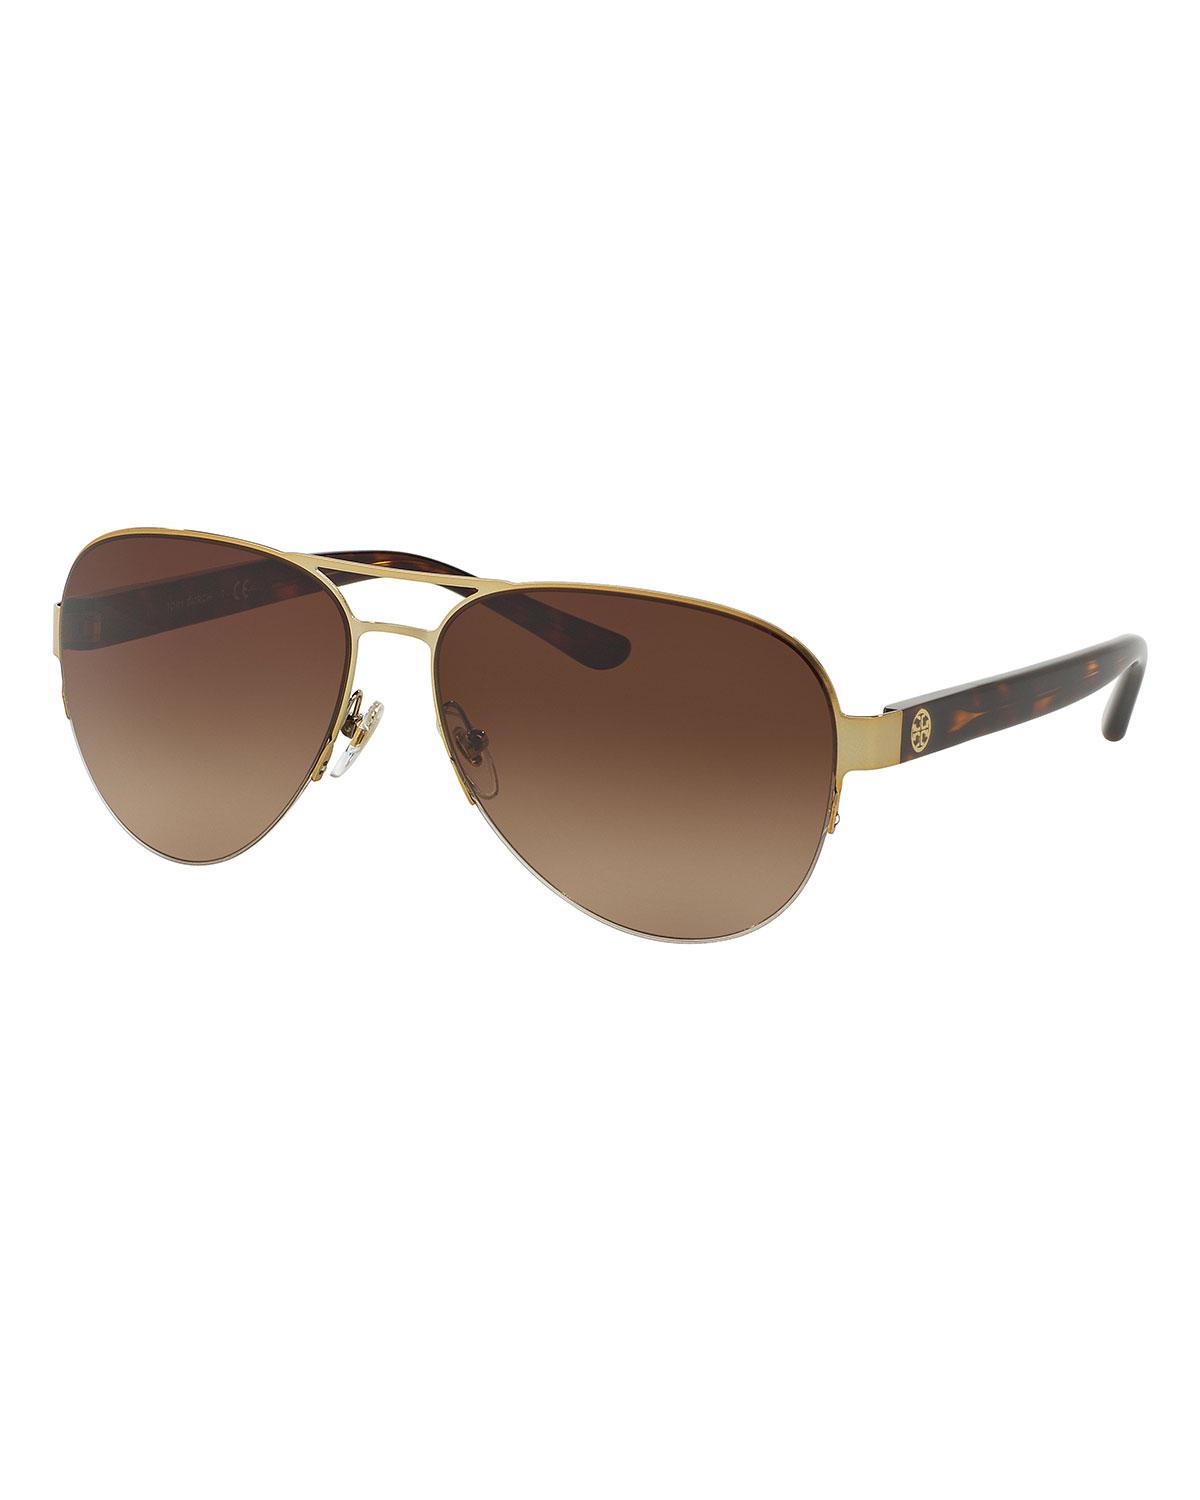 Tory Burch Metal Aviator Sunglasses in Gold/Tortoise (Brown) - Lyst